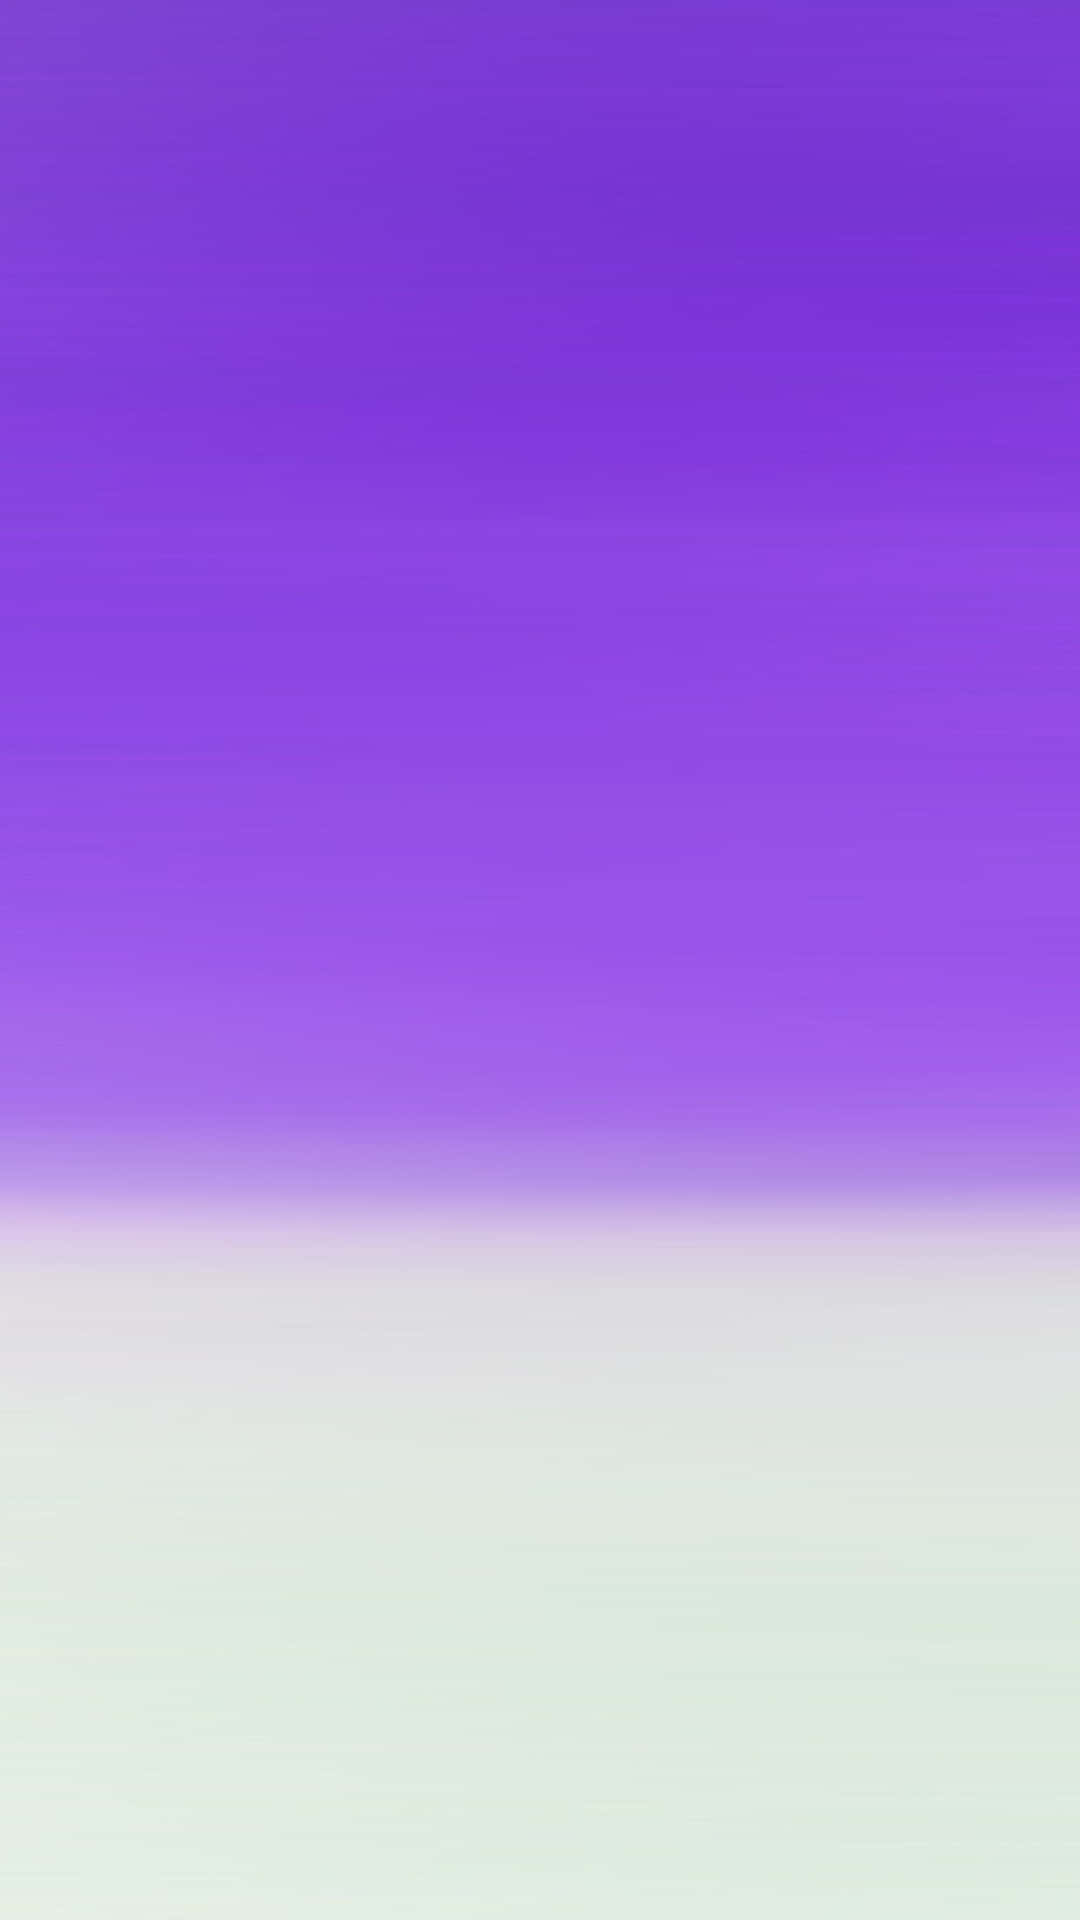 Bright Purple and White Background